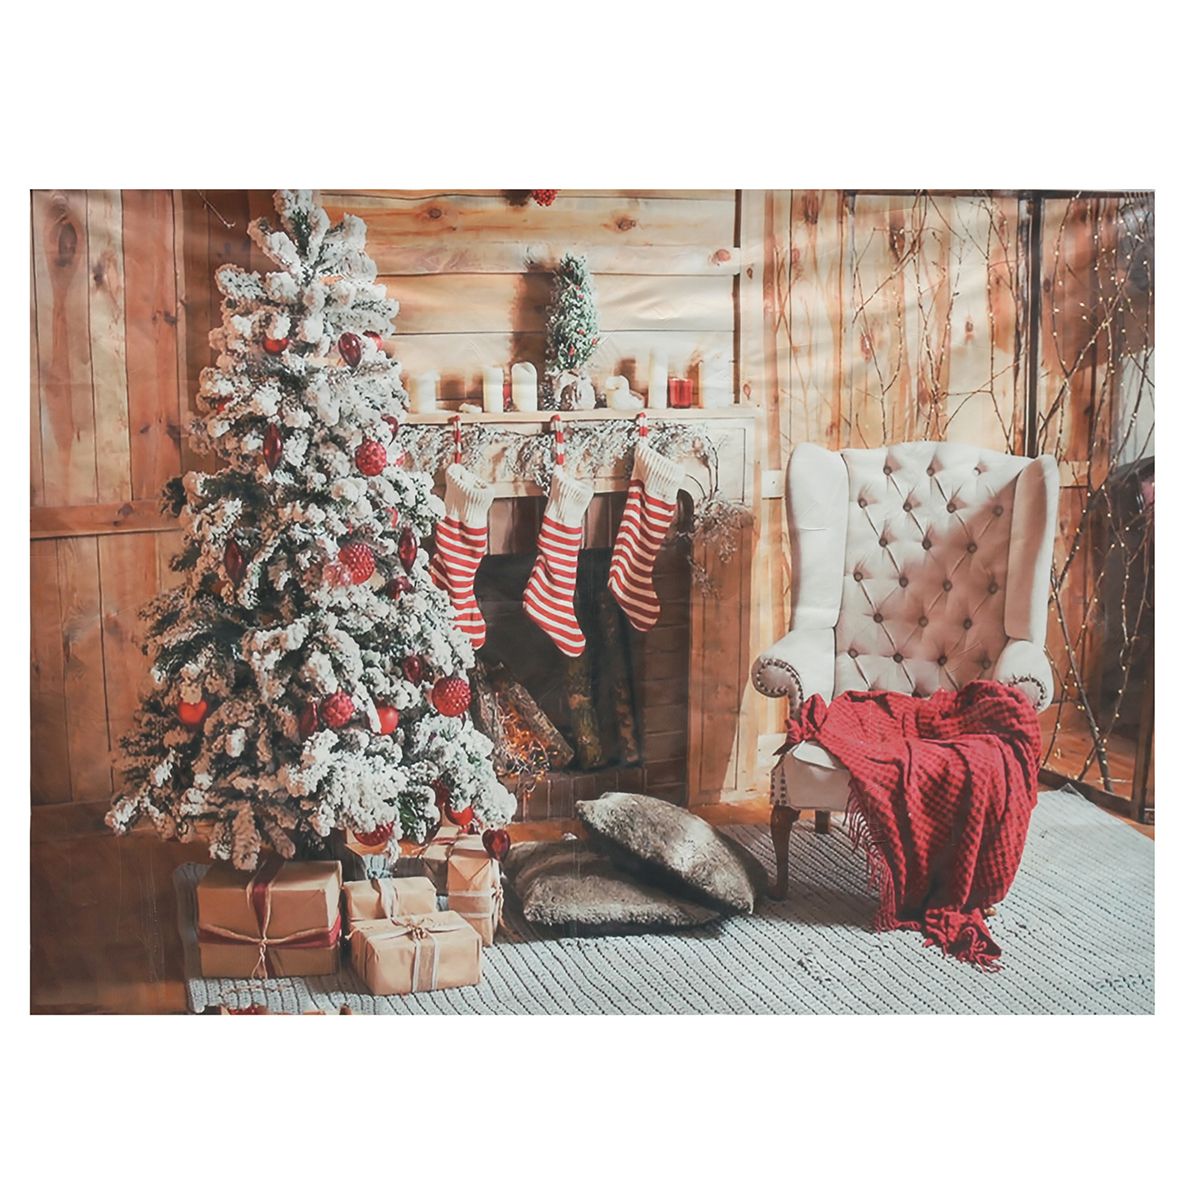 7x5ft-Christmas-Fireplace-Christmas-Tree-Chair-Gift-Stockings-Photography-Backdrop-Studio-Prop-Backg-1348885